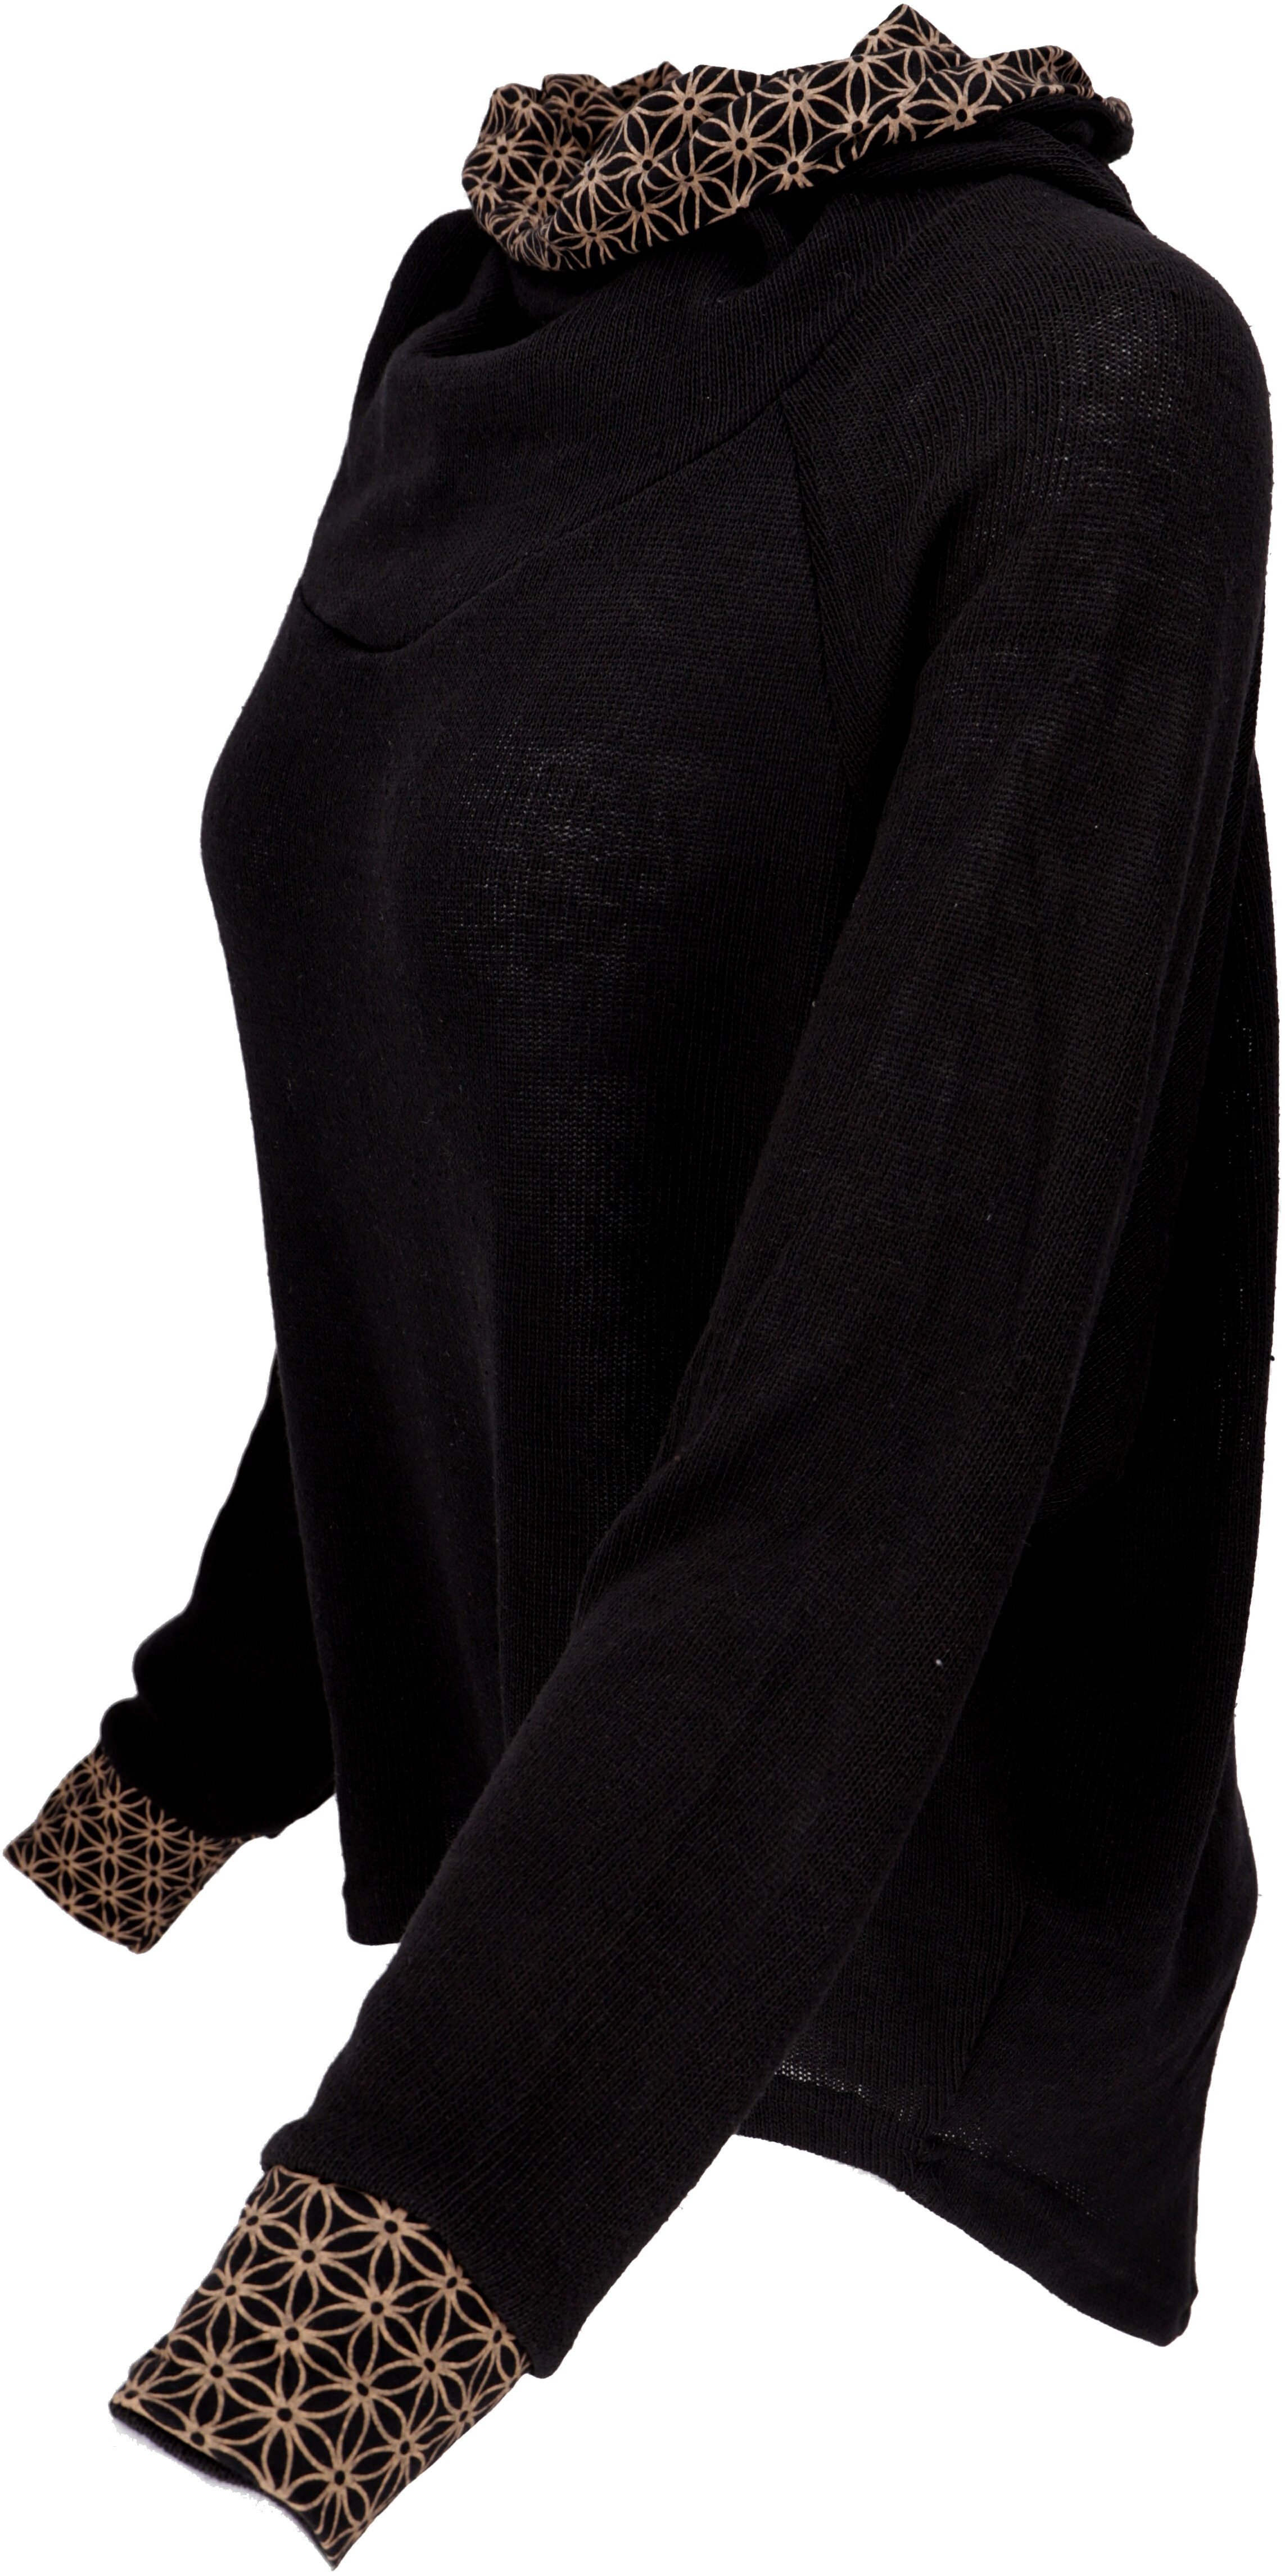 schwarz Hoody, Bekleidung Longsleeve Sweatshirt, Kapuzenpullover alternative Pullover, -.. Guru-Shop